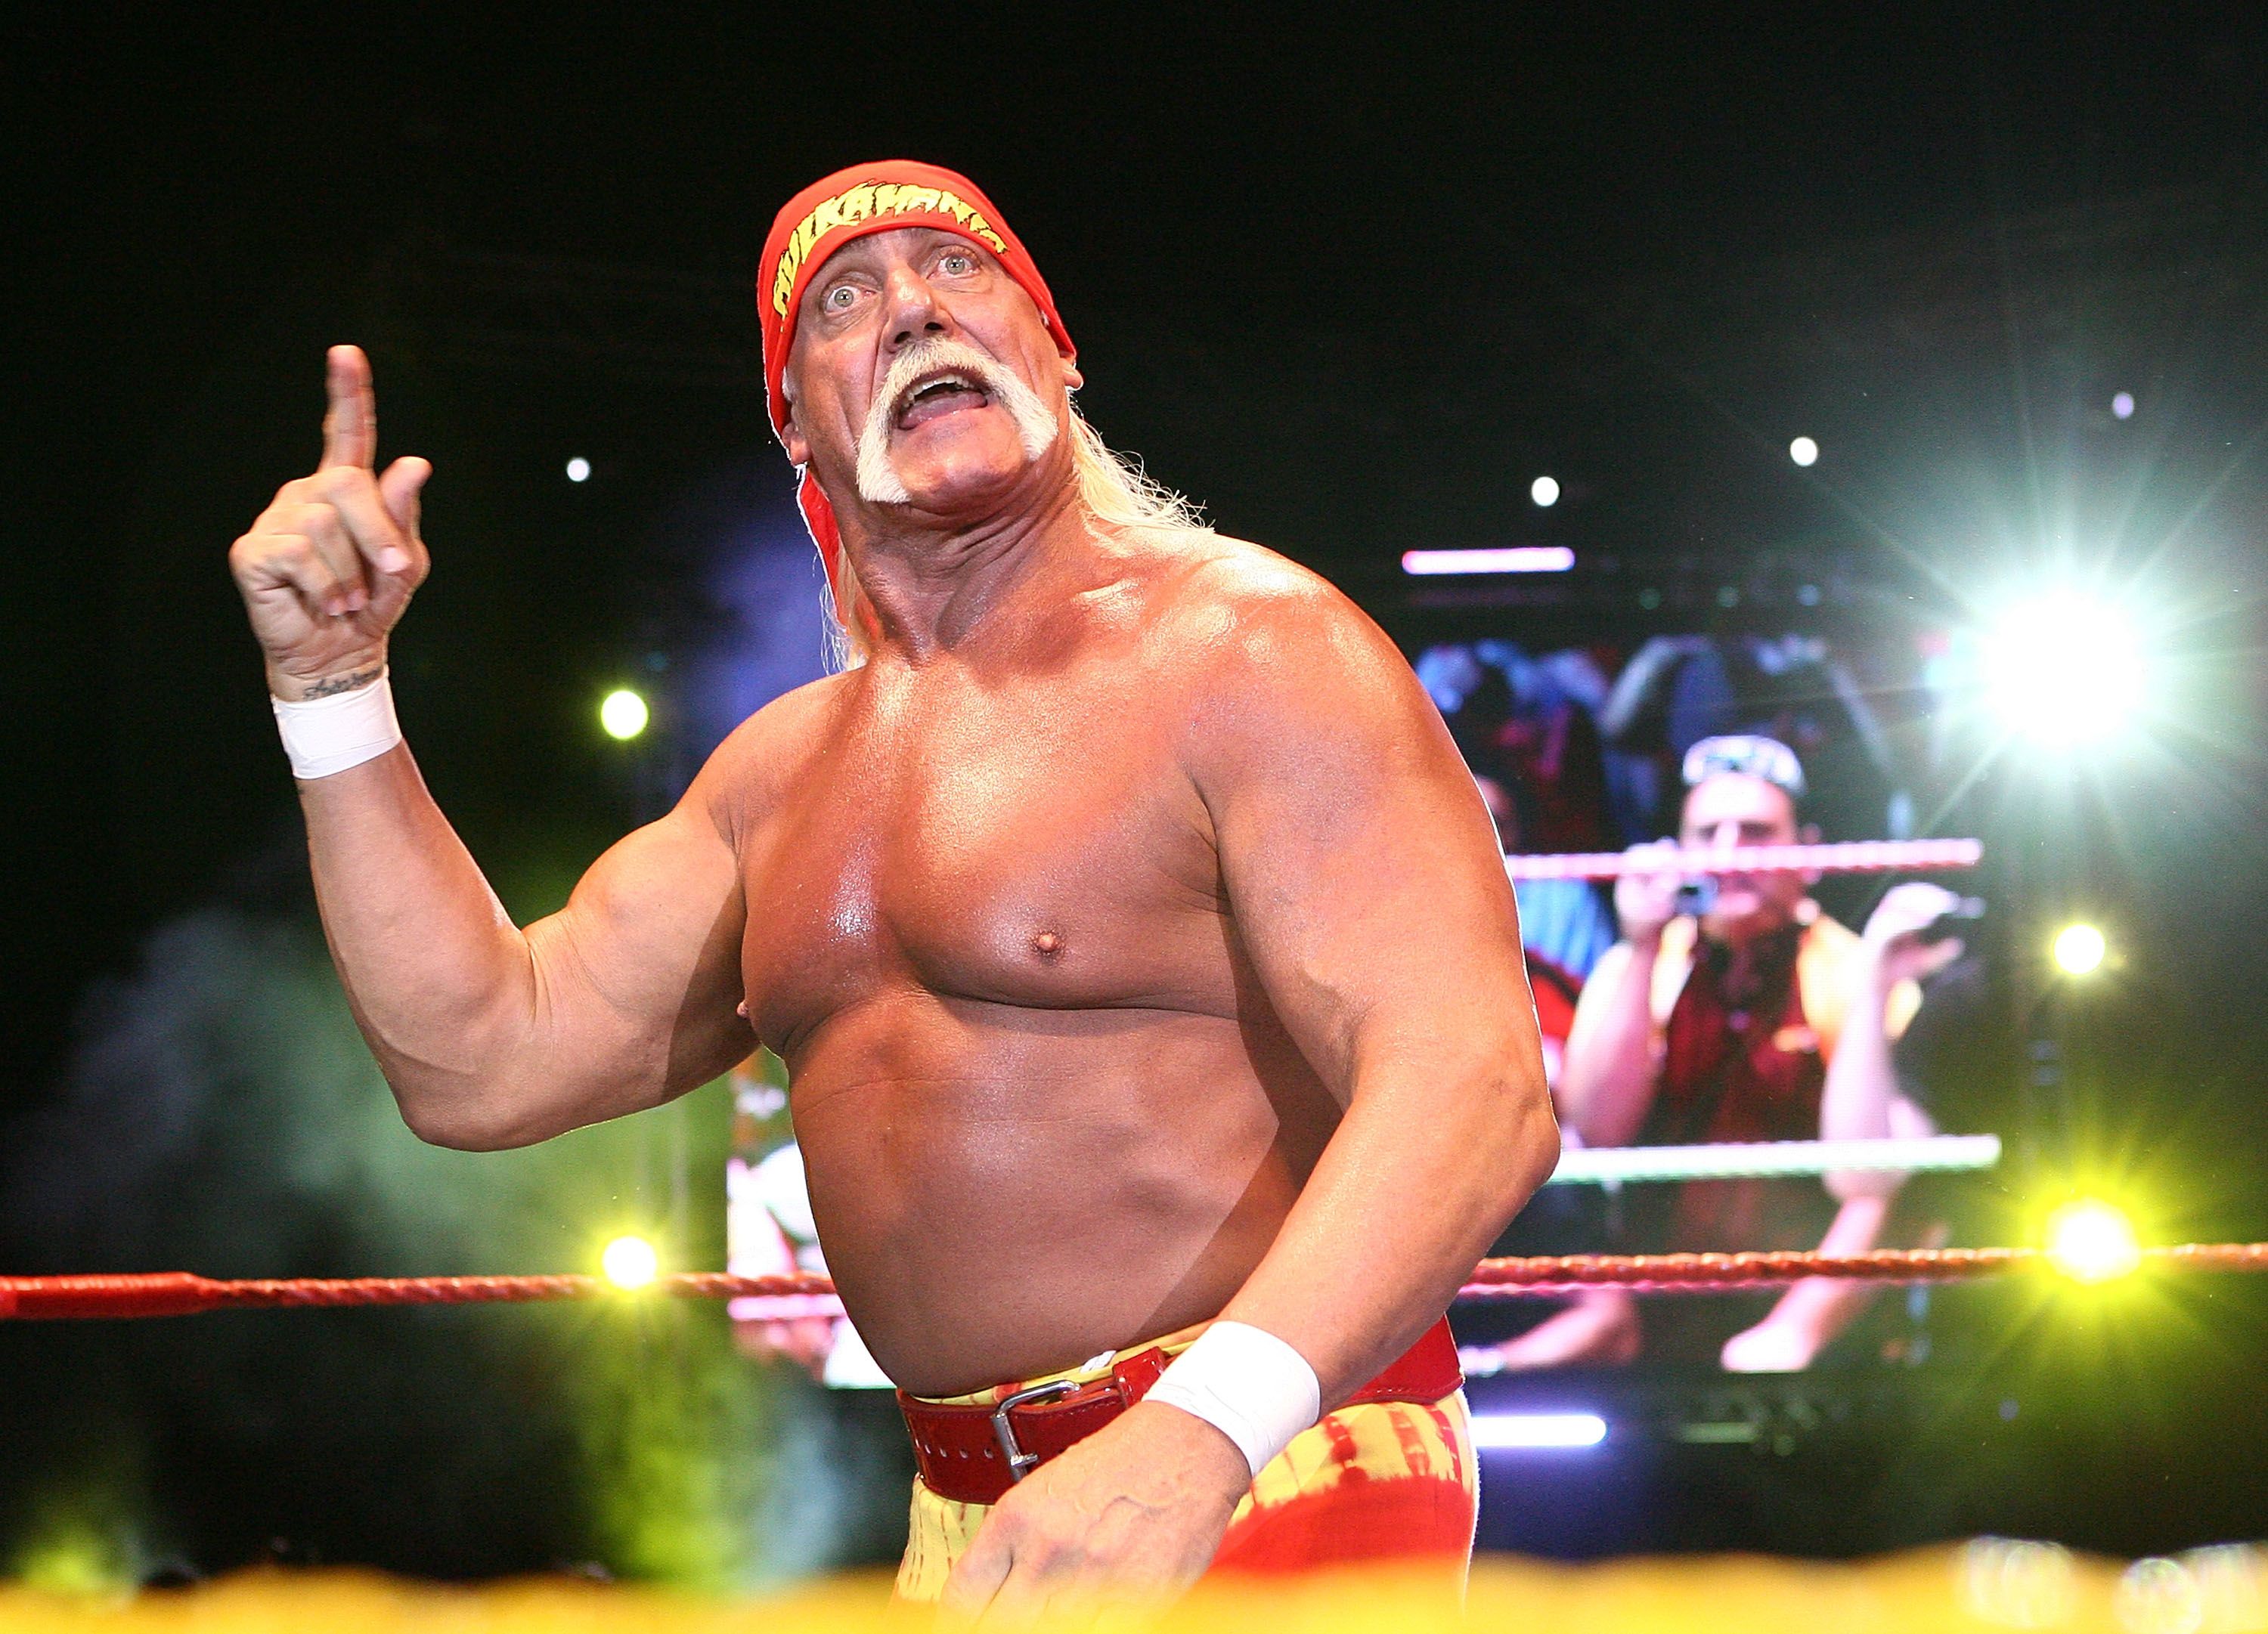 Hulk Hogan Is Down To His '9th Grade Weight' In New Photo - WorldNewsEra